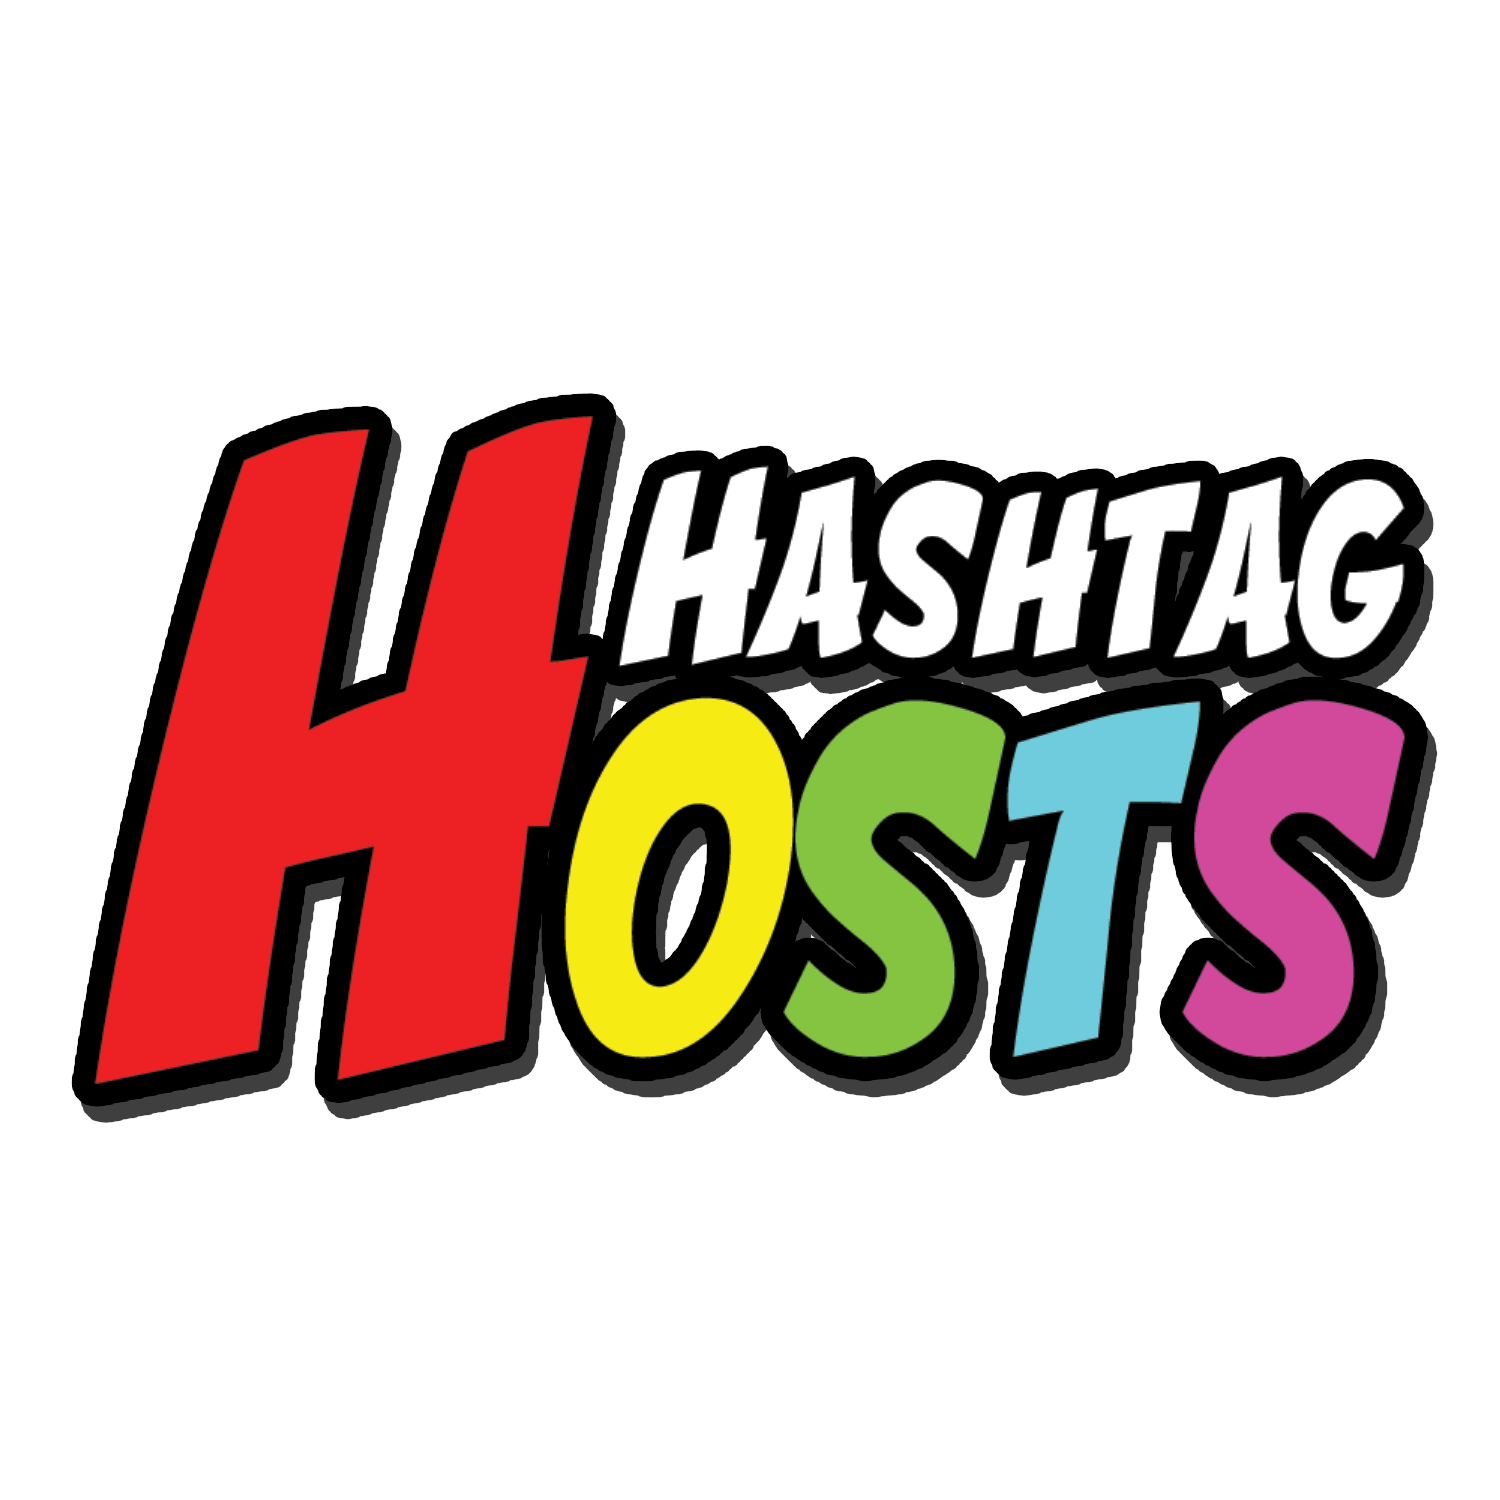 Hashtag Hosts Ltd